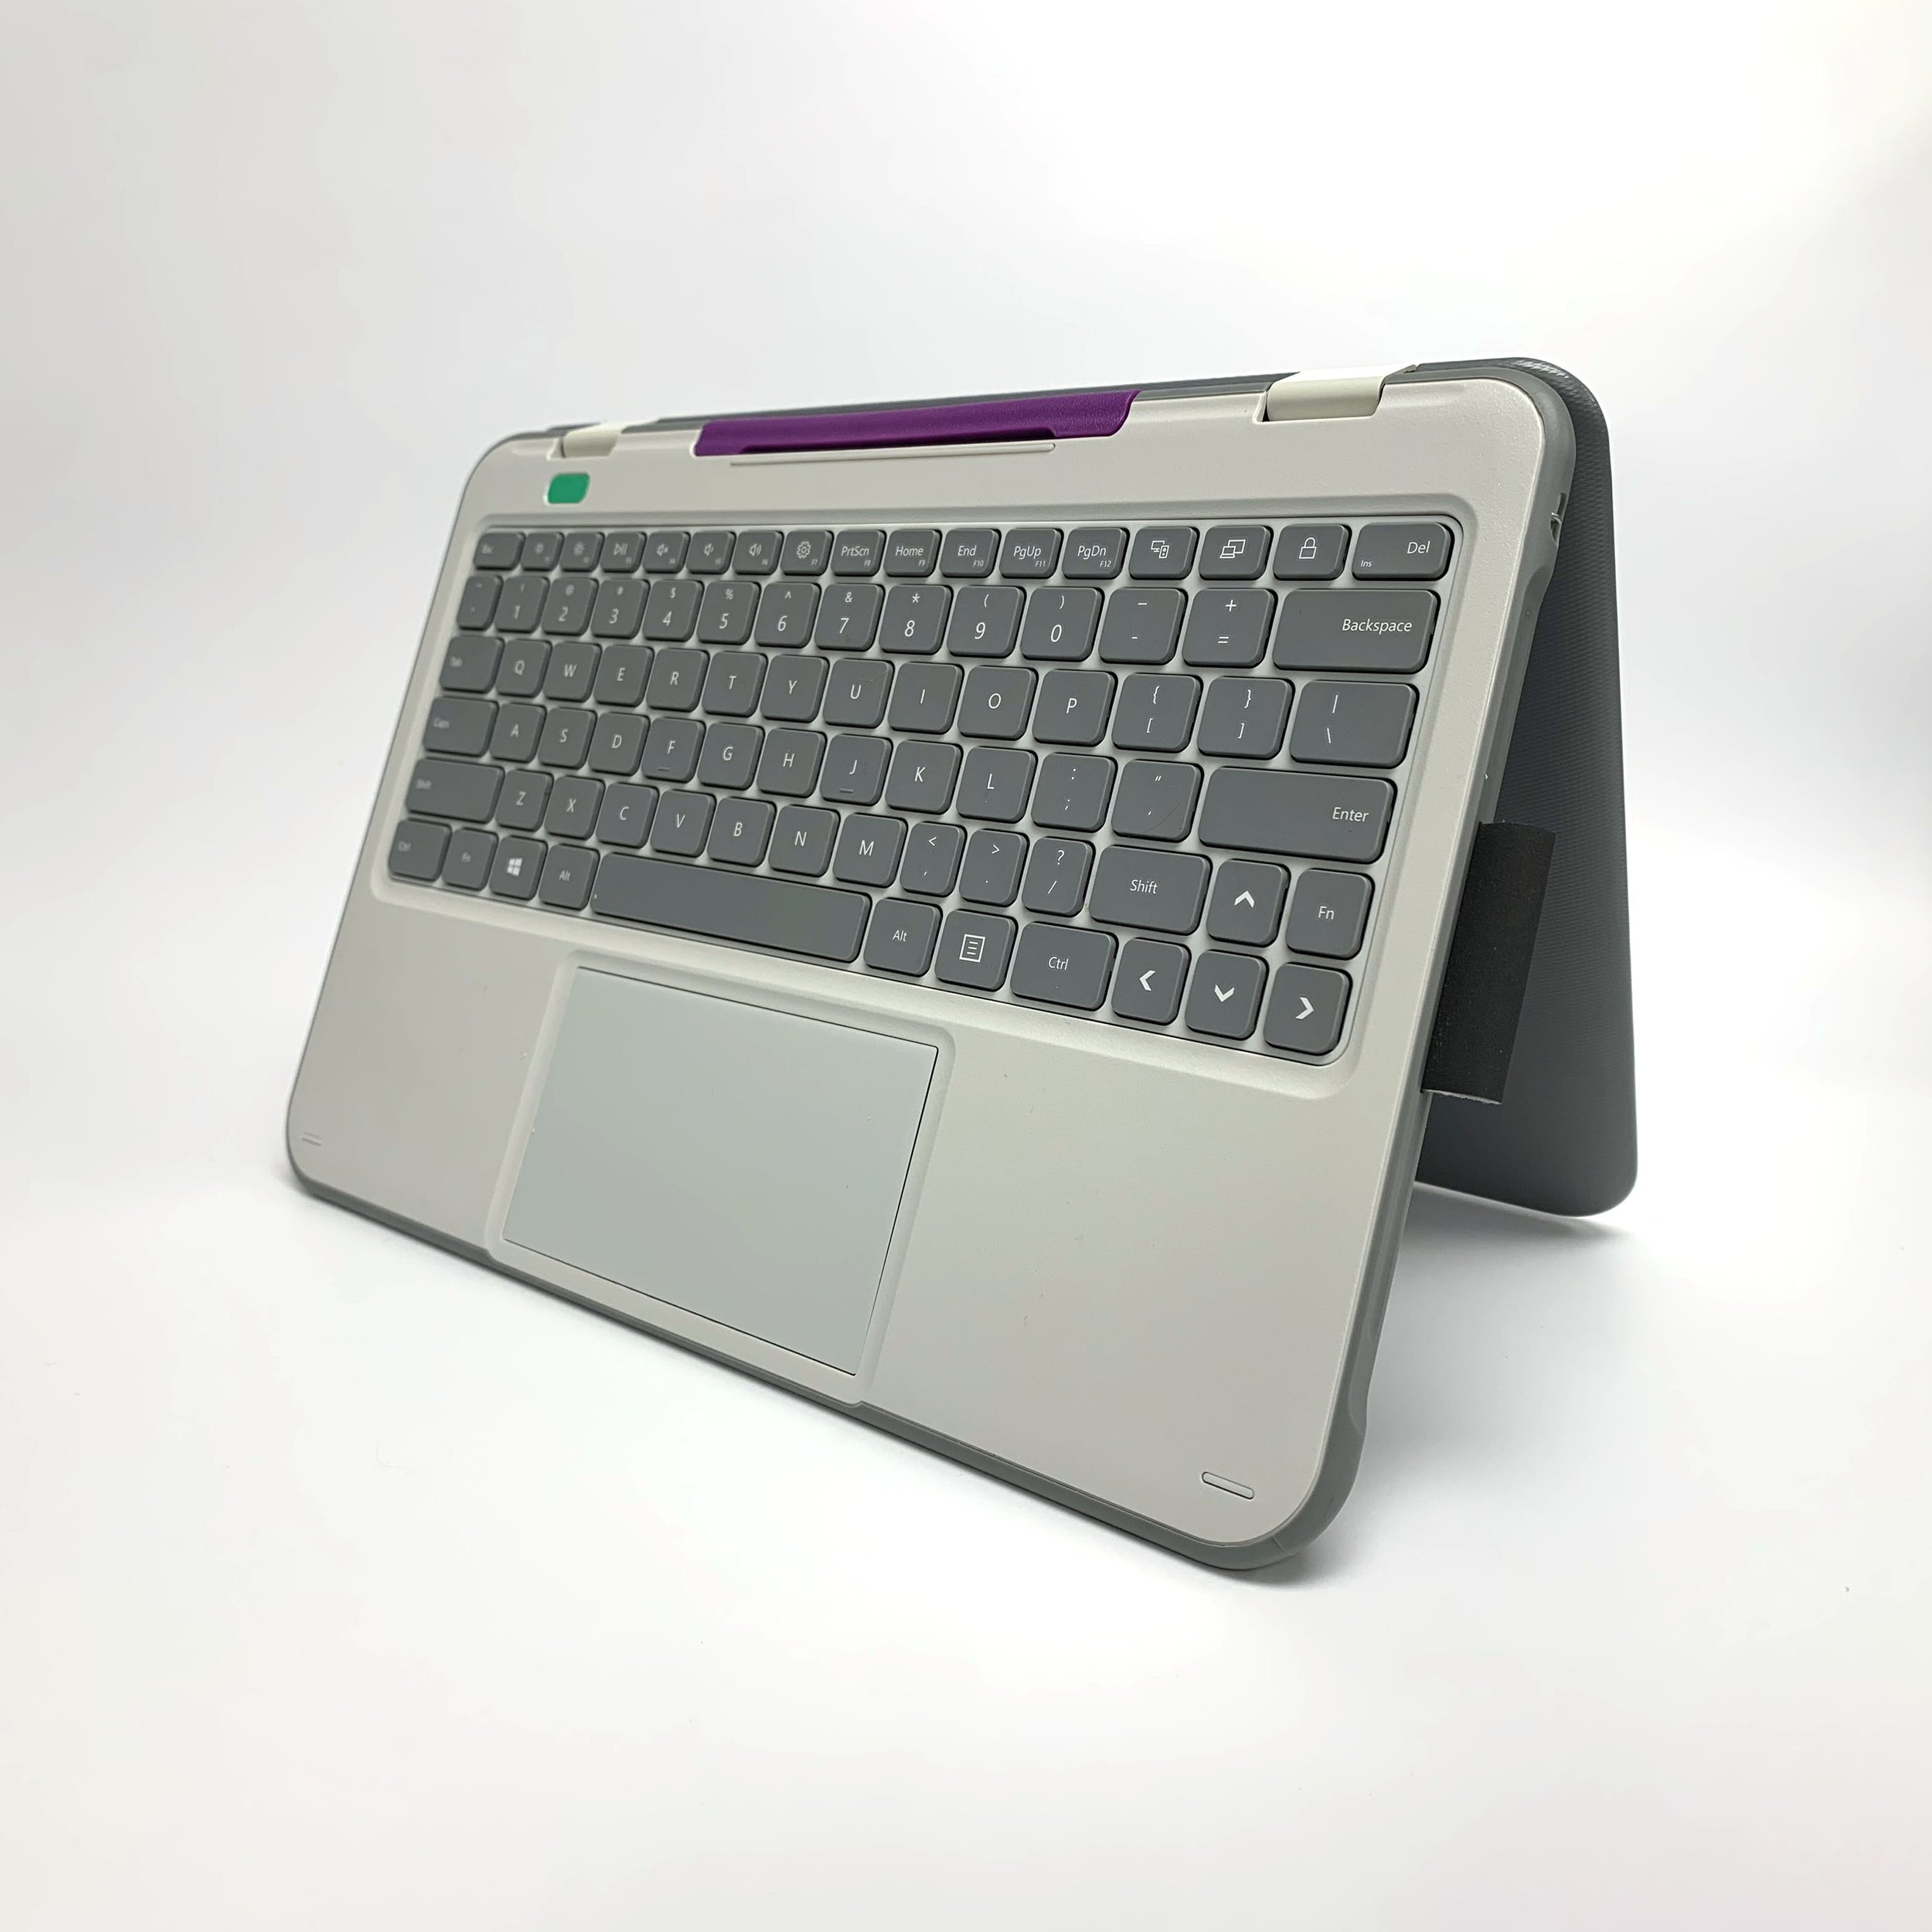 1184-1185-Infinity-Laptop-3.jpg